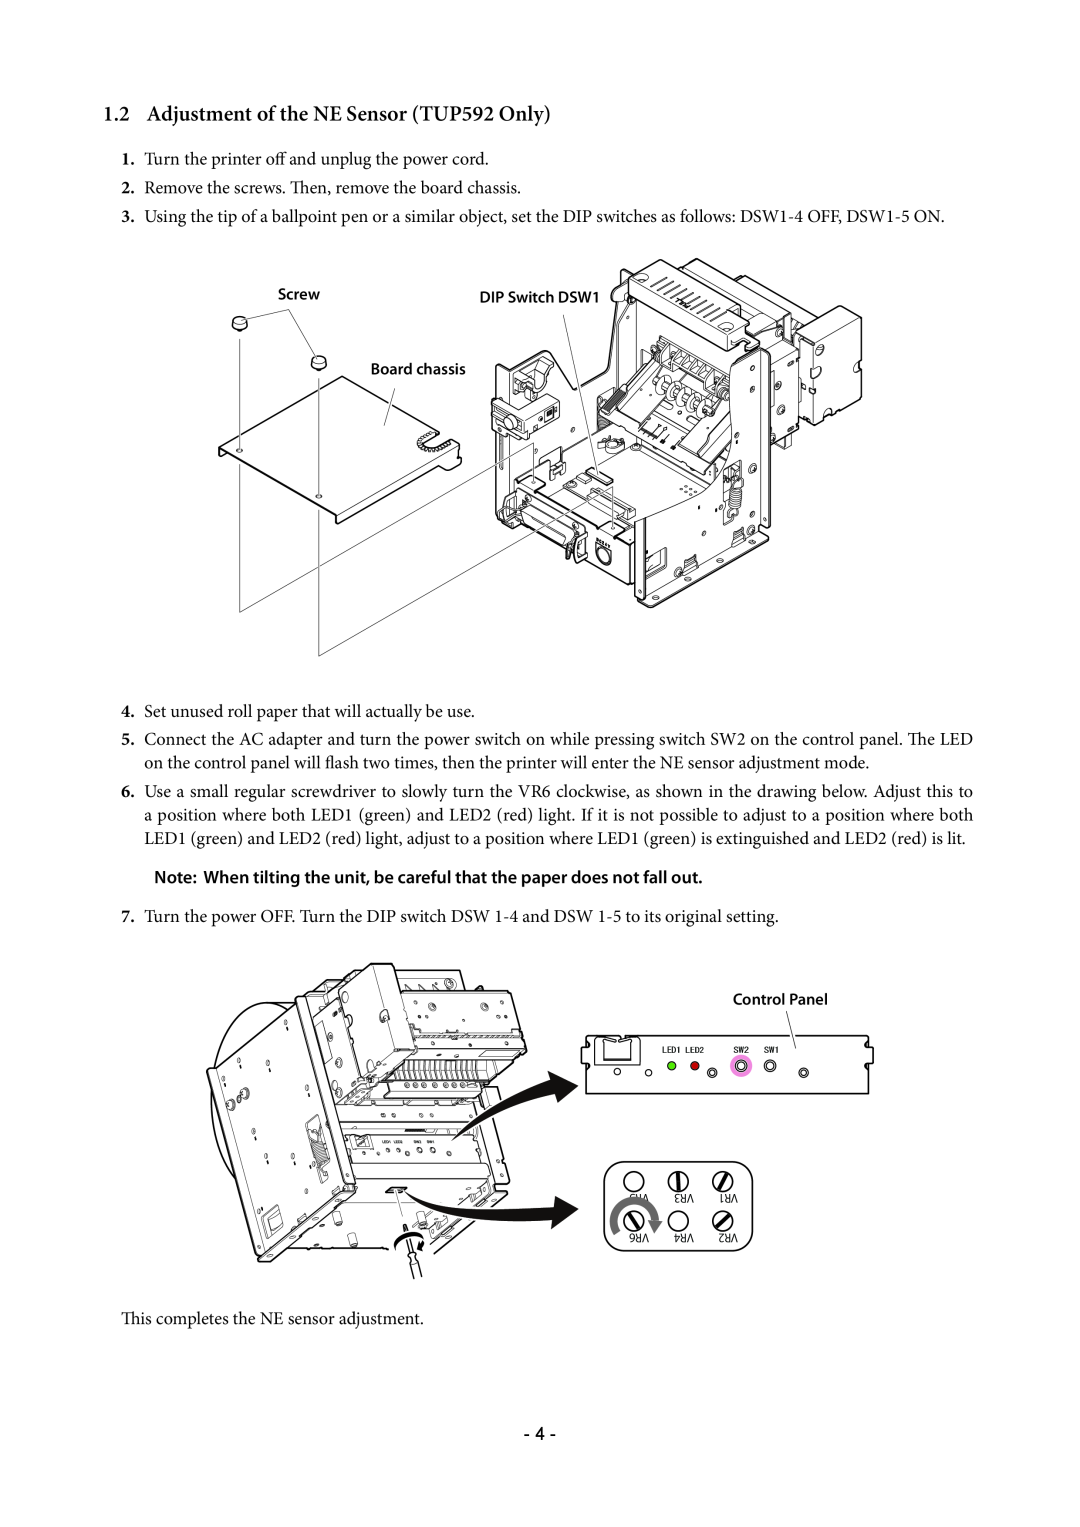 Star Micronics TUP500 technical manual Adjustment of the NE Sensor TUP592 Only 